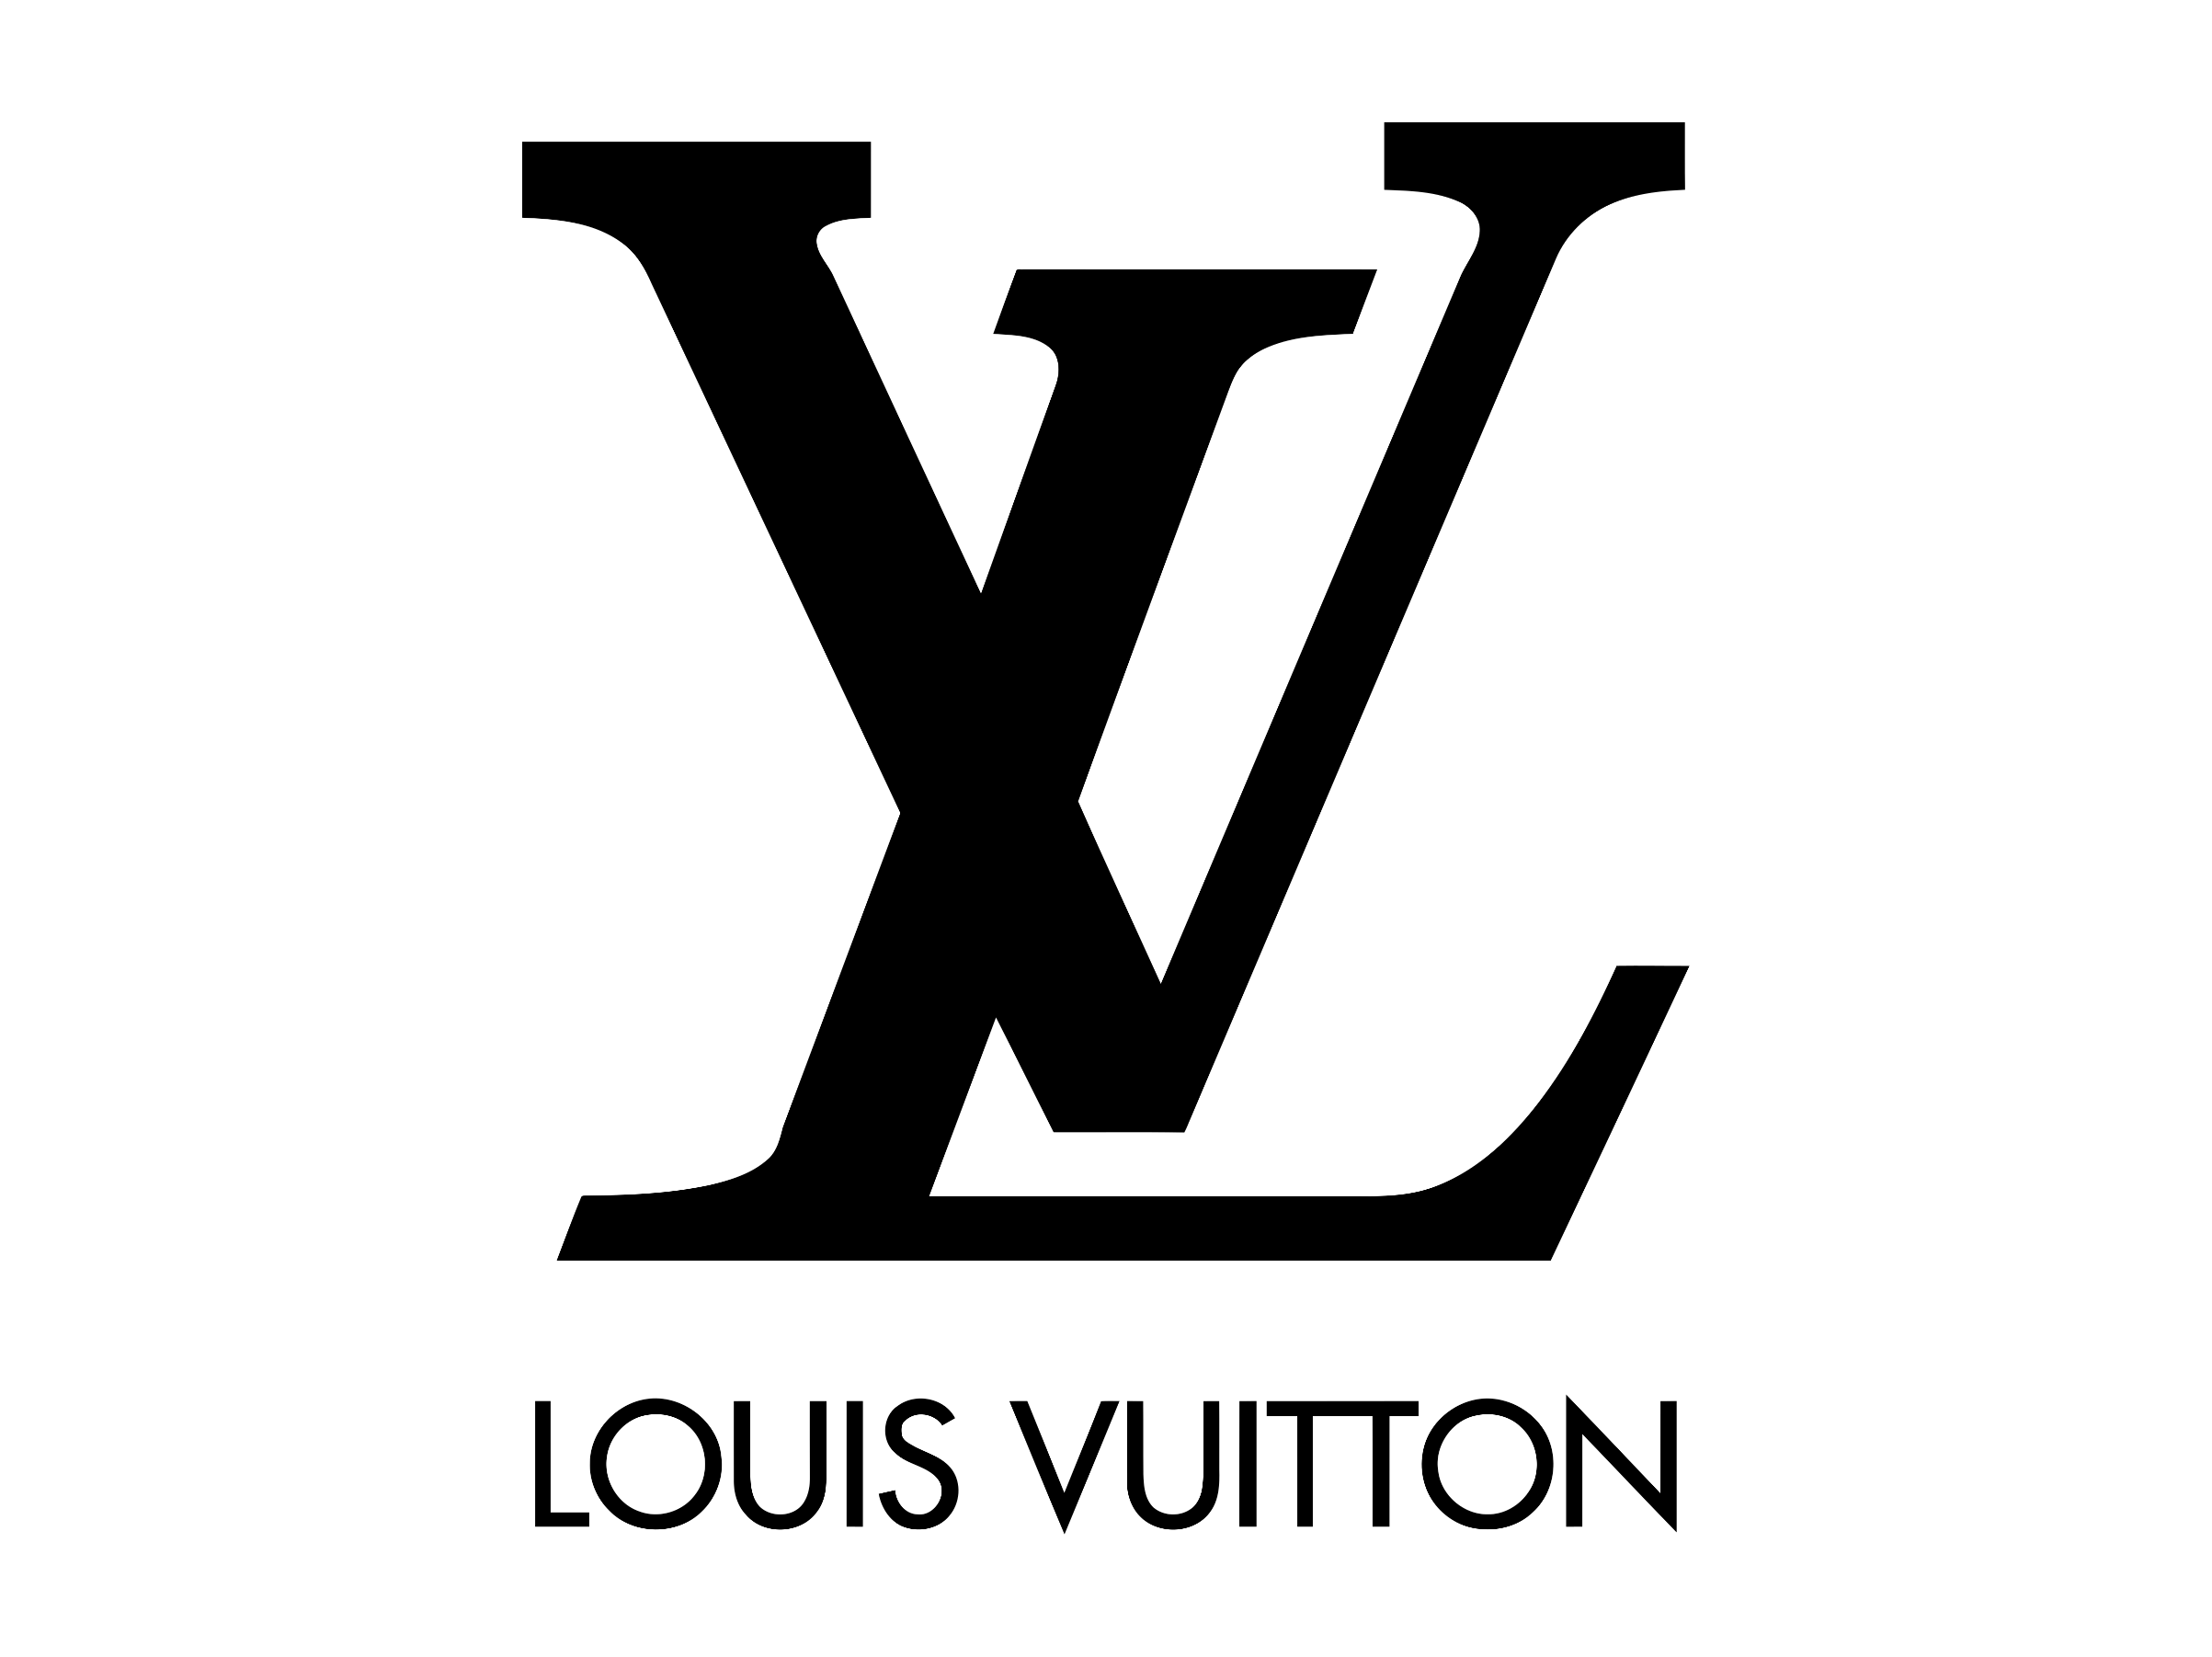 Fondation Louis Vuitton, Paris  Virtual travel by allthegoodies